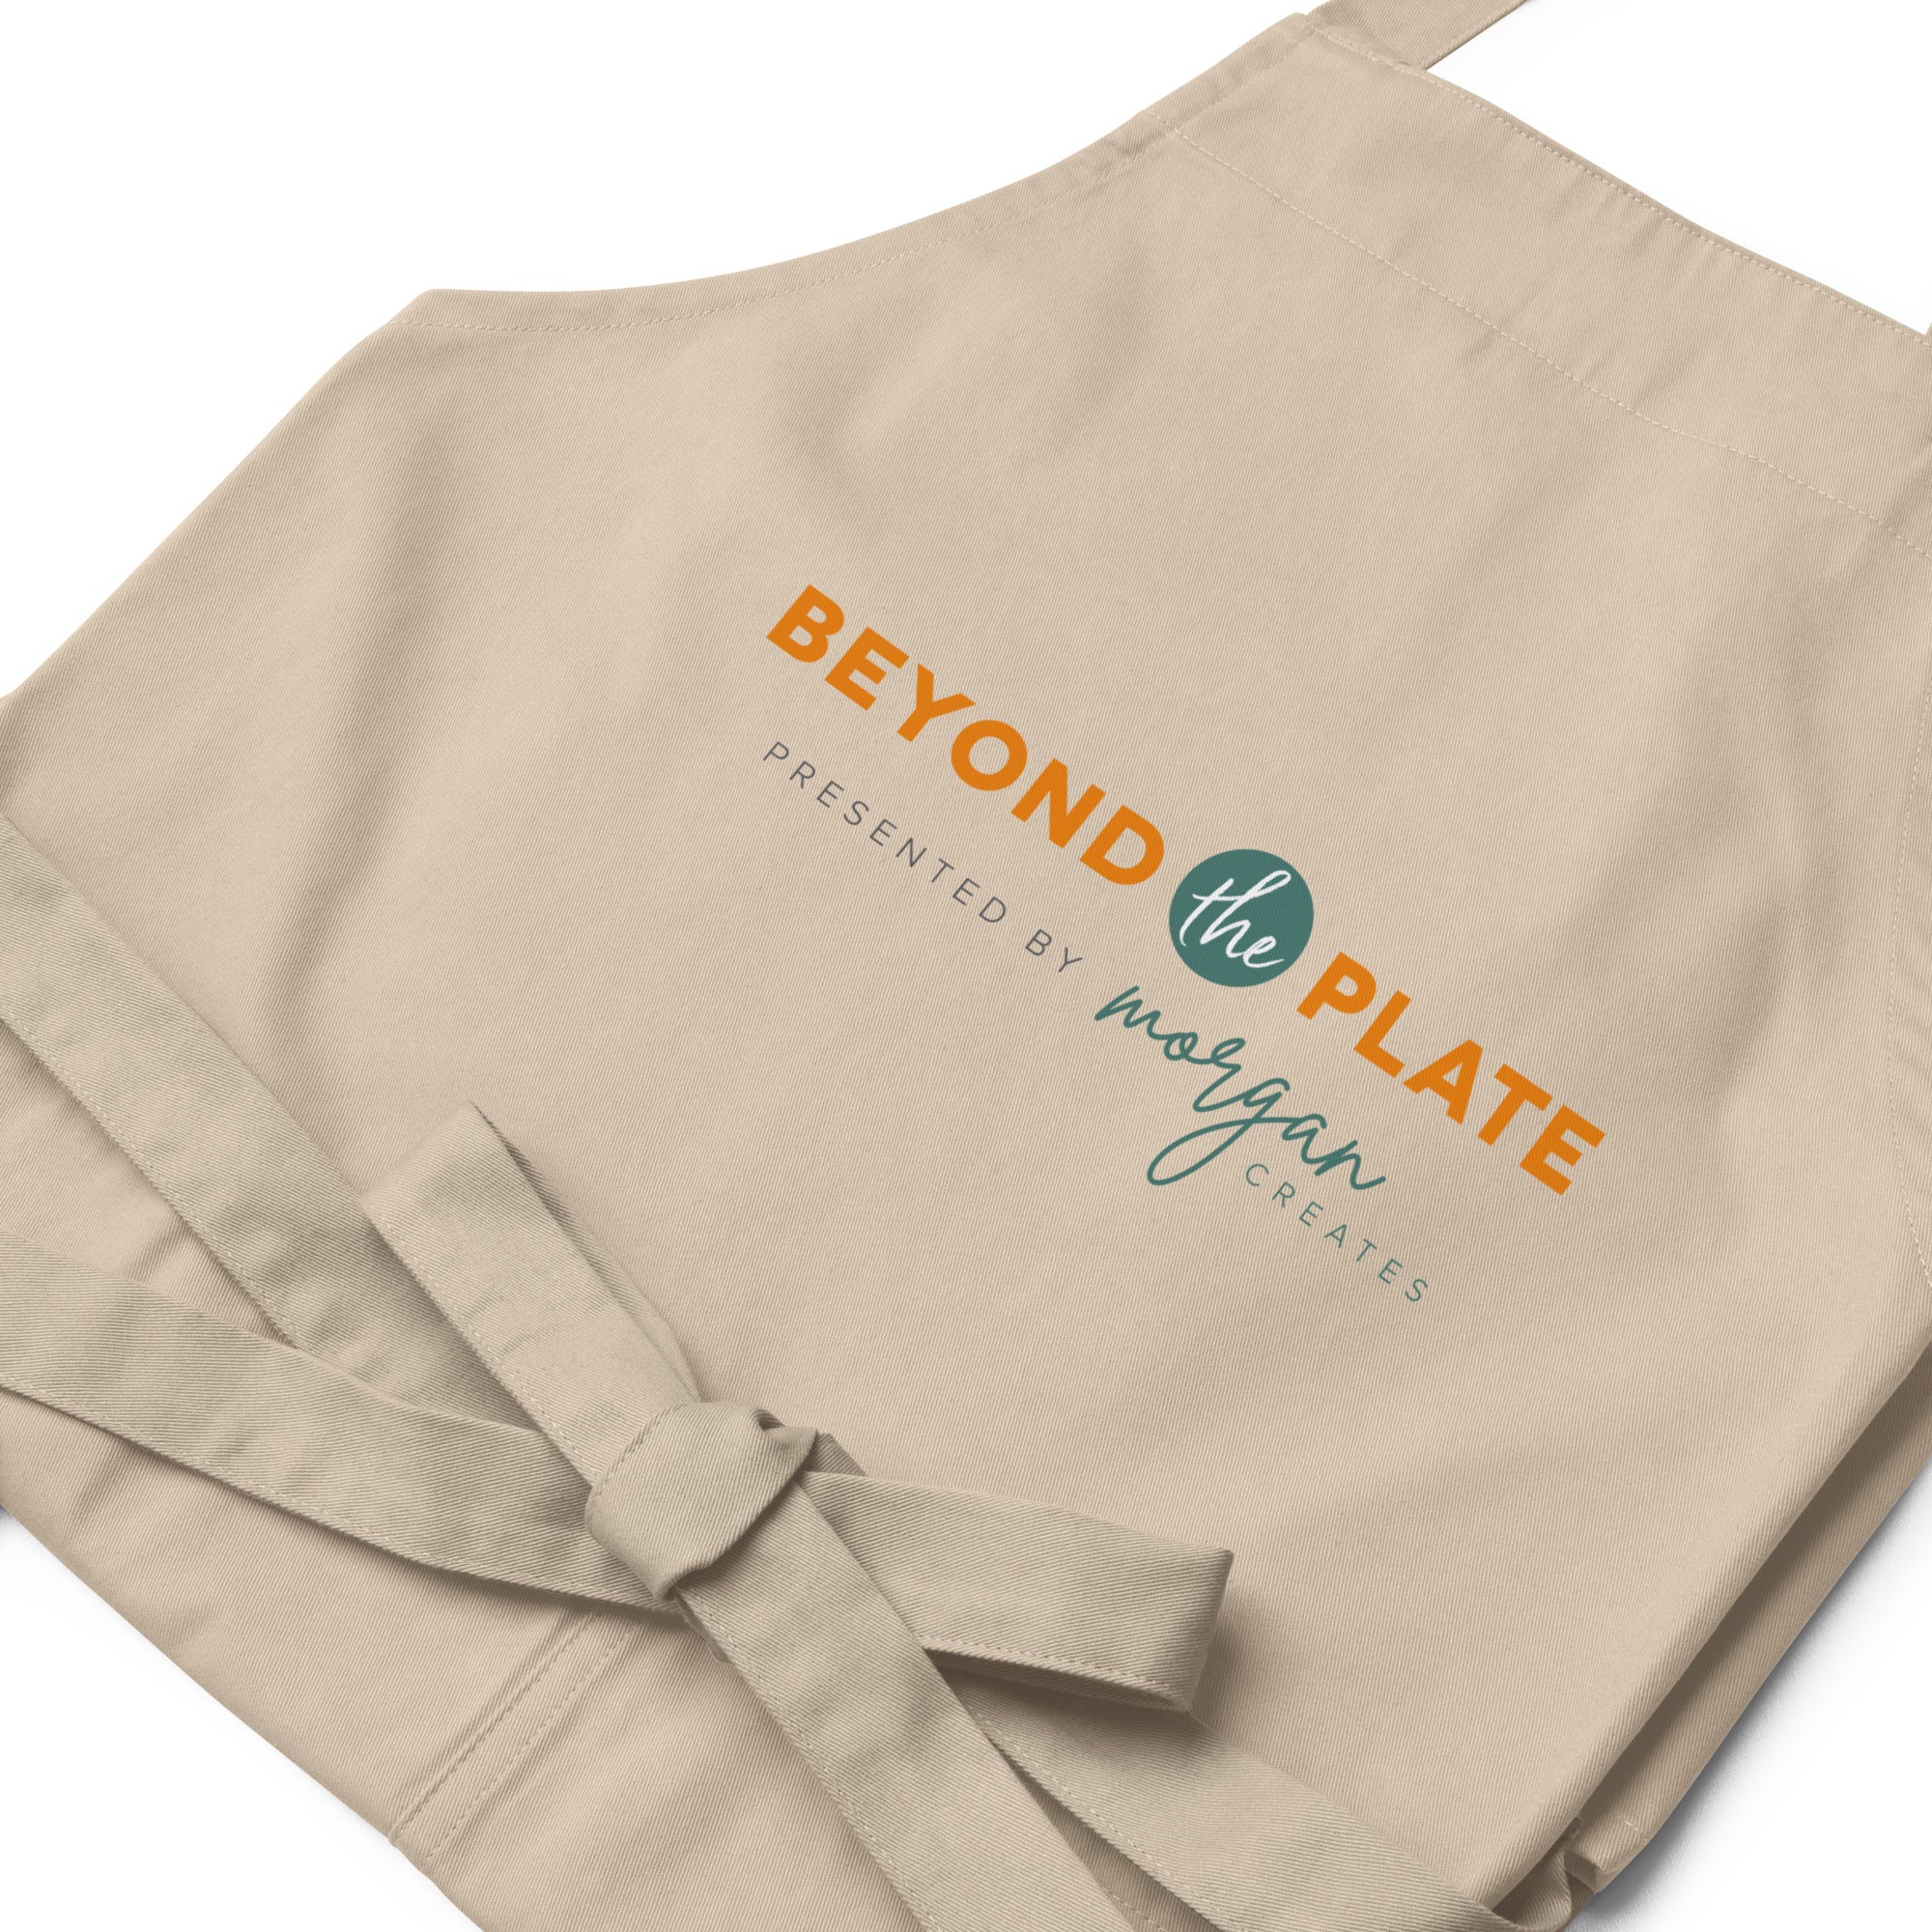 Beyond the Plate Organic Cotton Apron